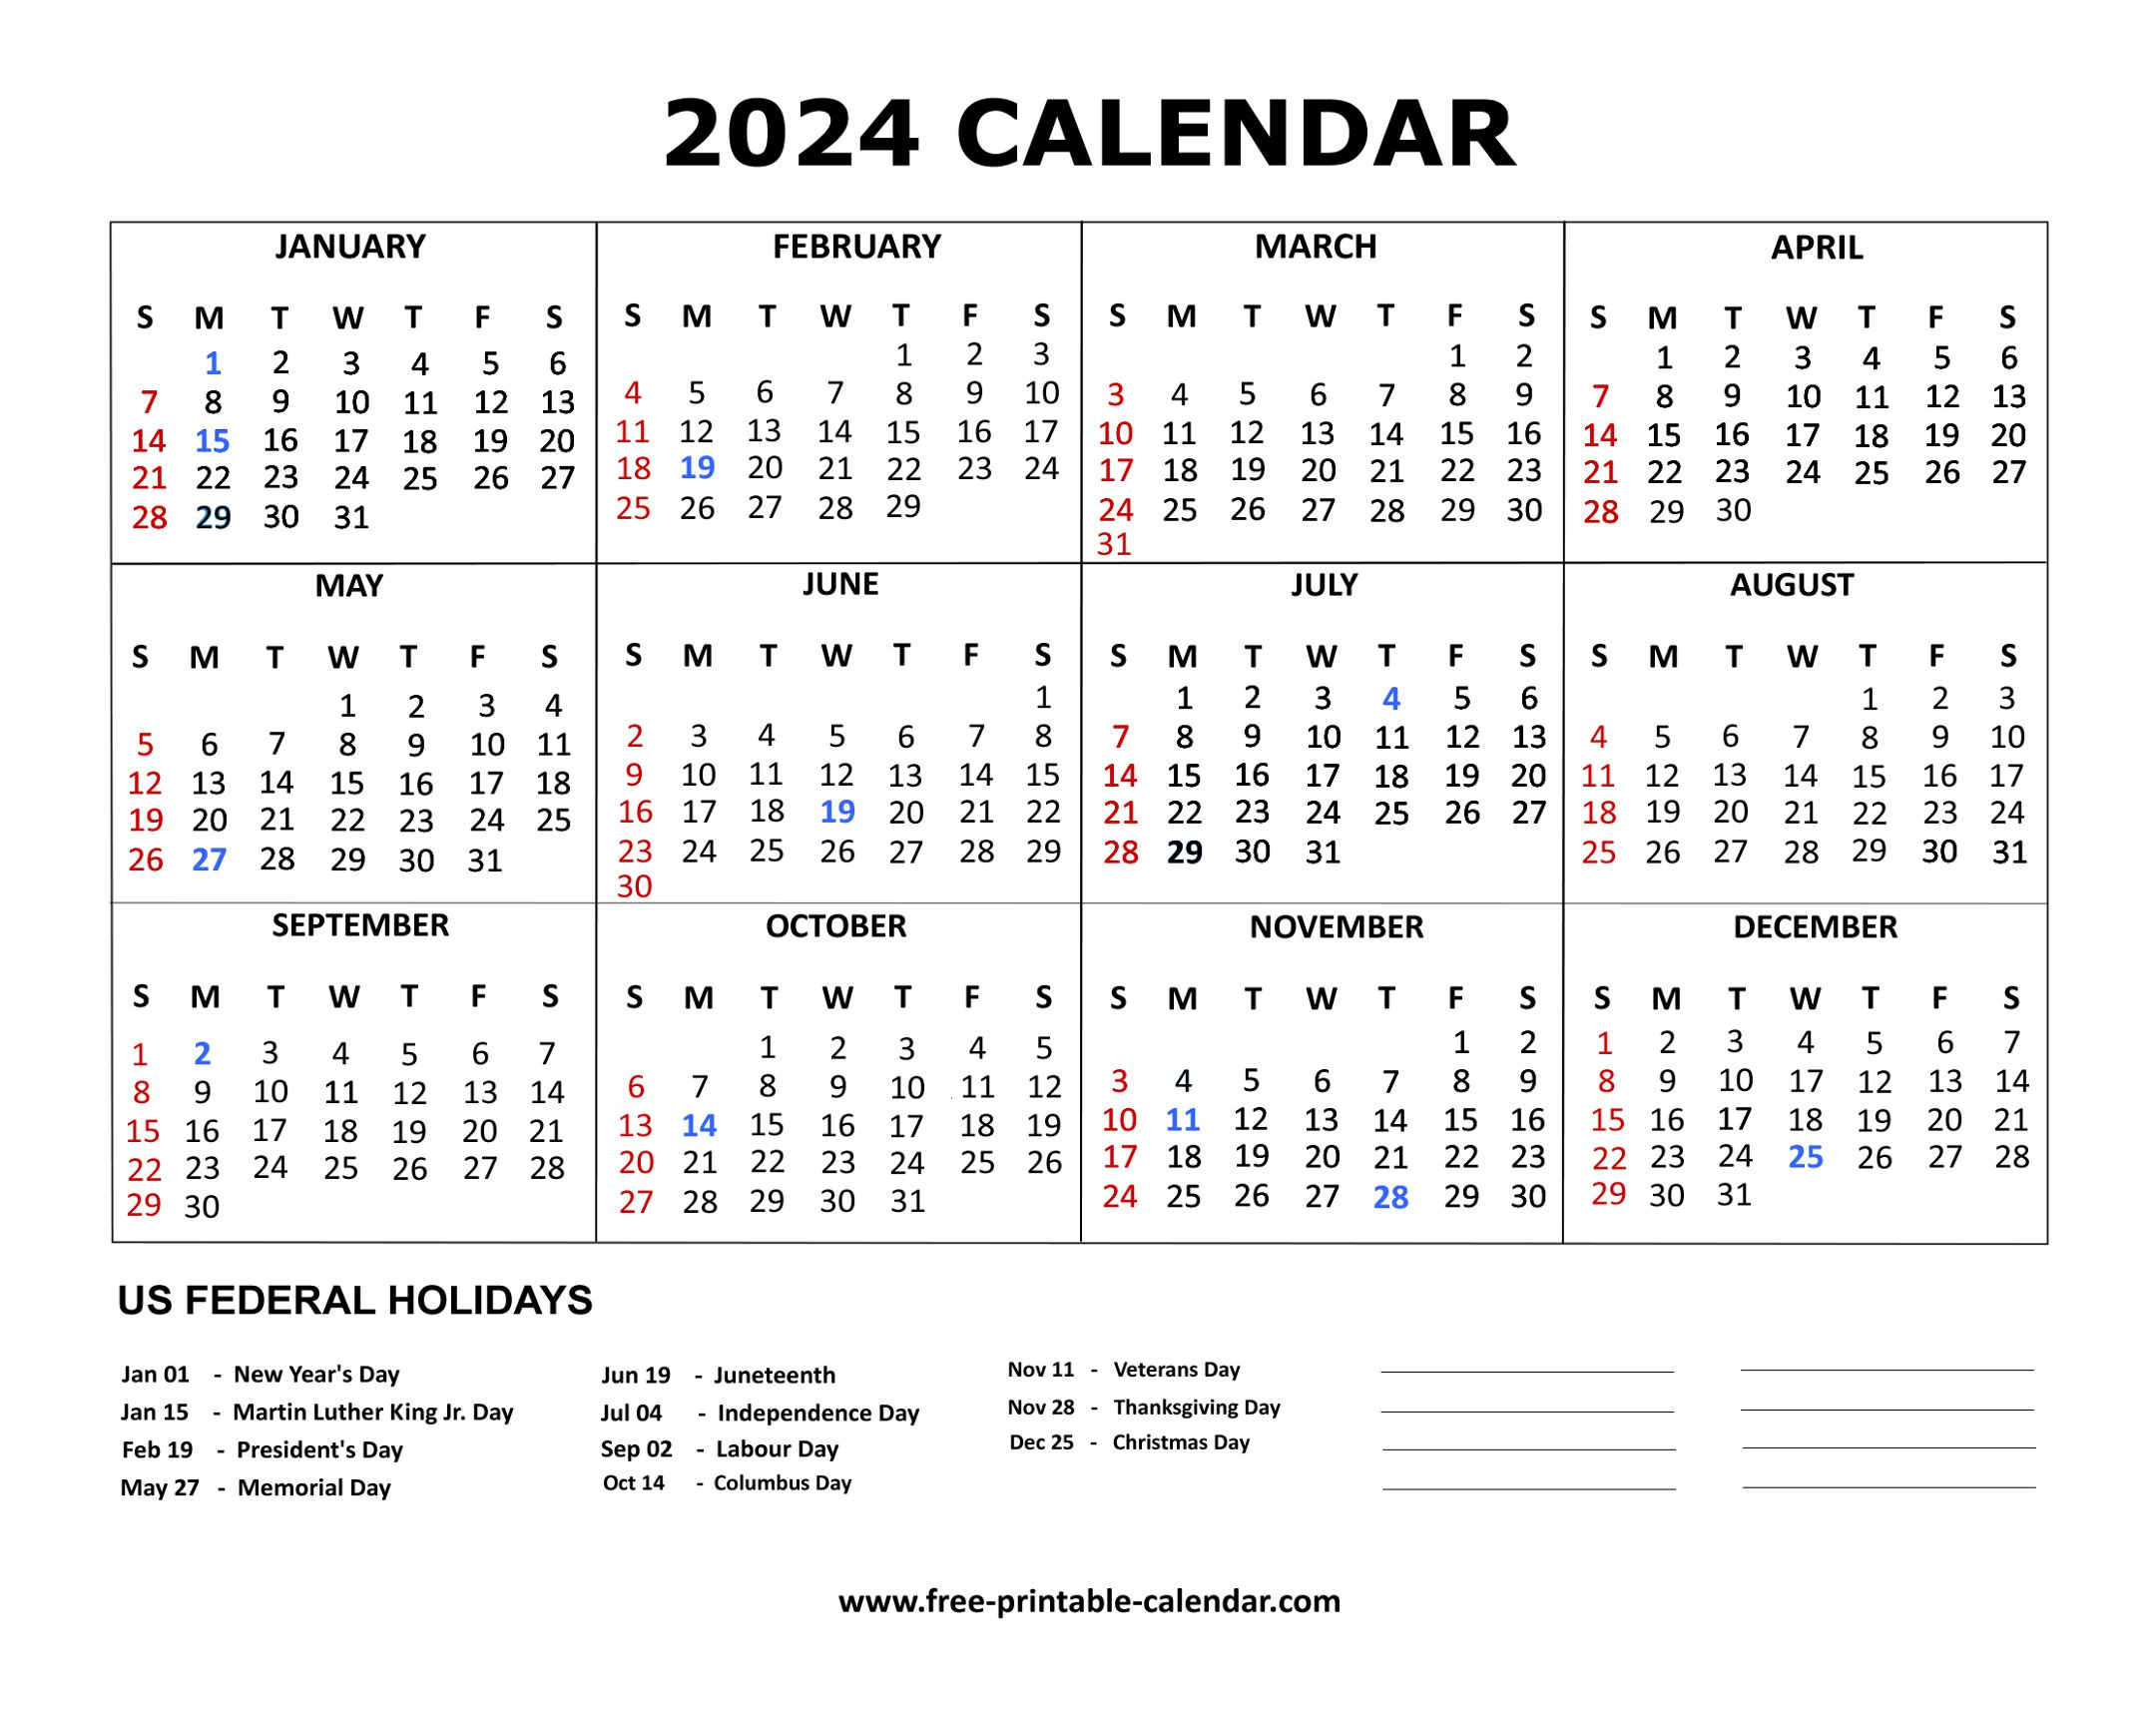 2024 Calendar | Printable Calendar 2024 With Us Holidays Free Download